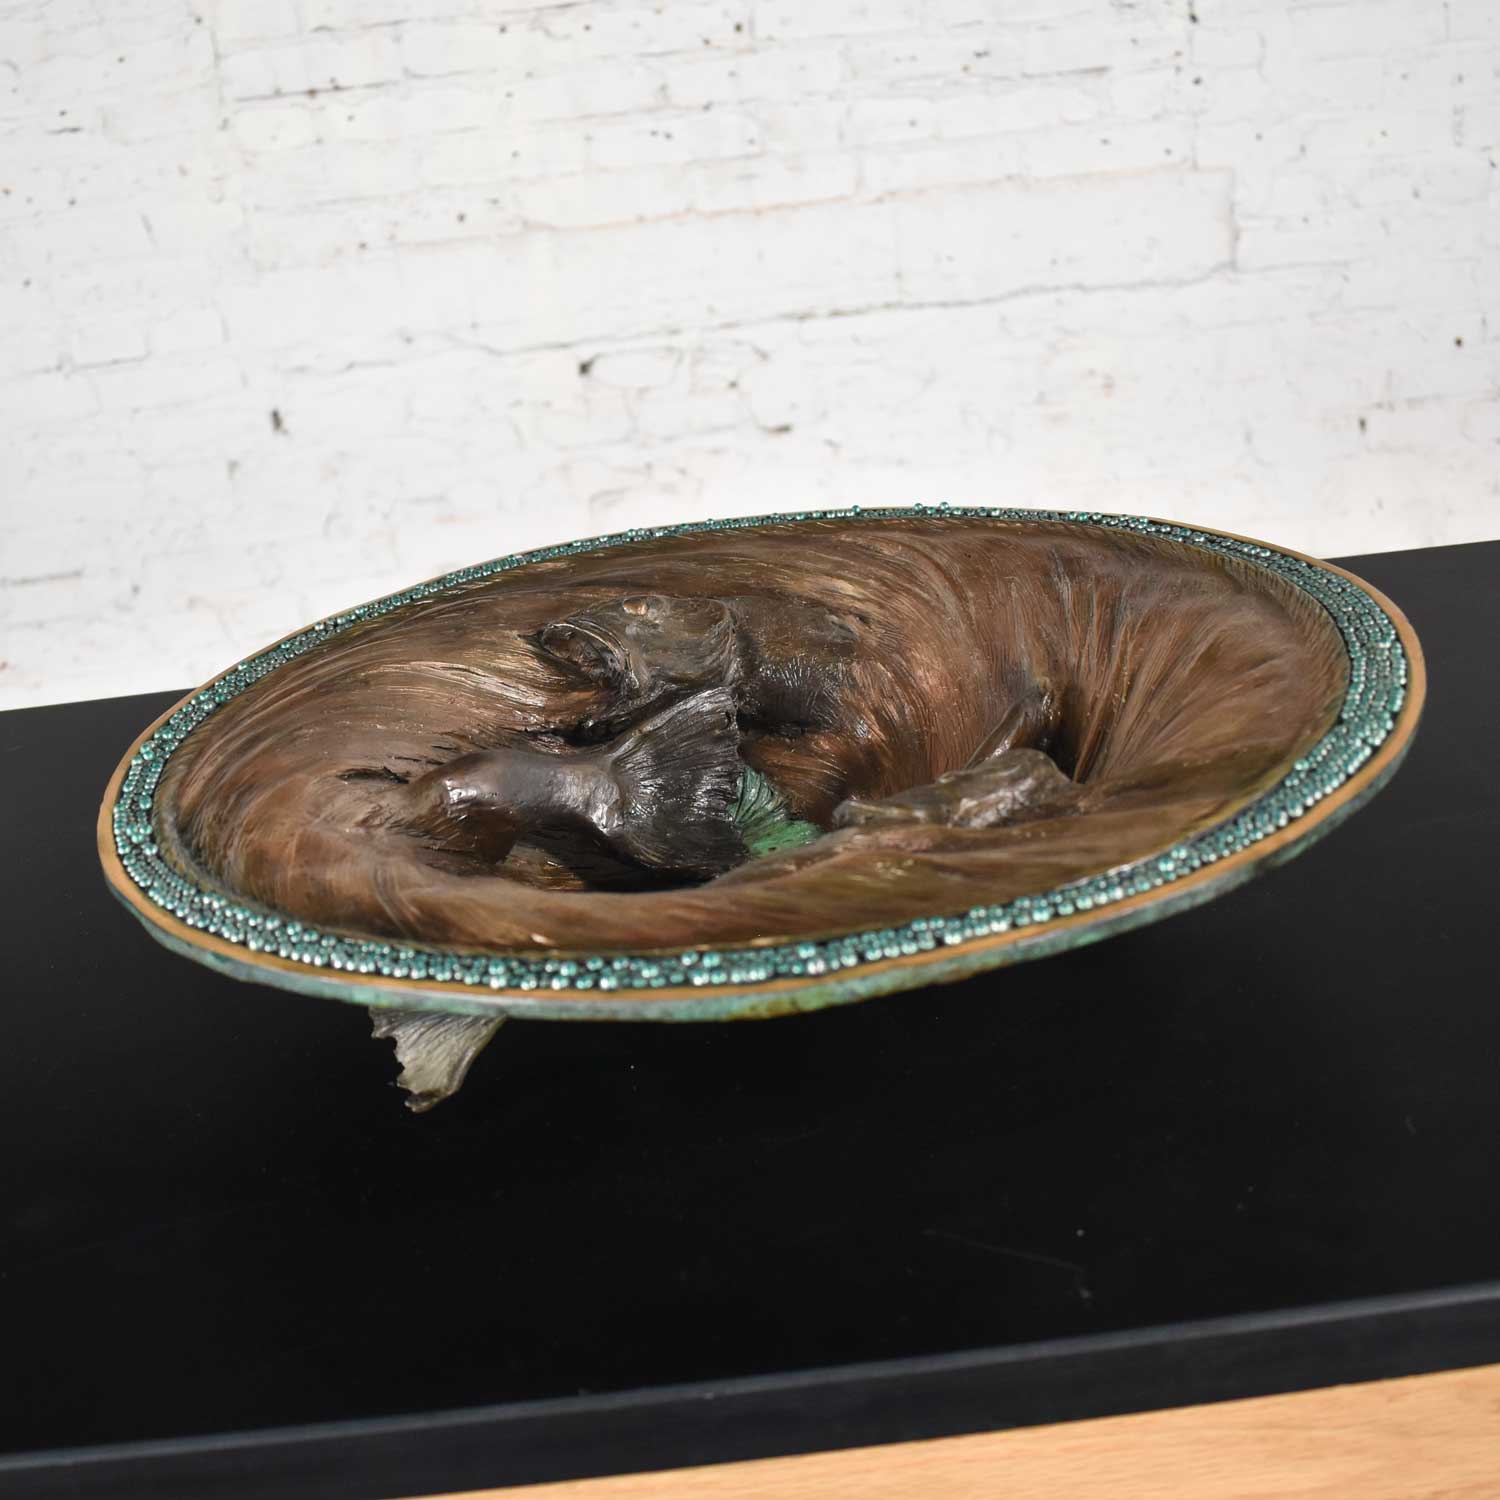 Organic Modern Cast Bronze Bowl Sculpture with Fish Design by John Forsythe